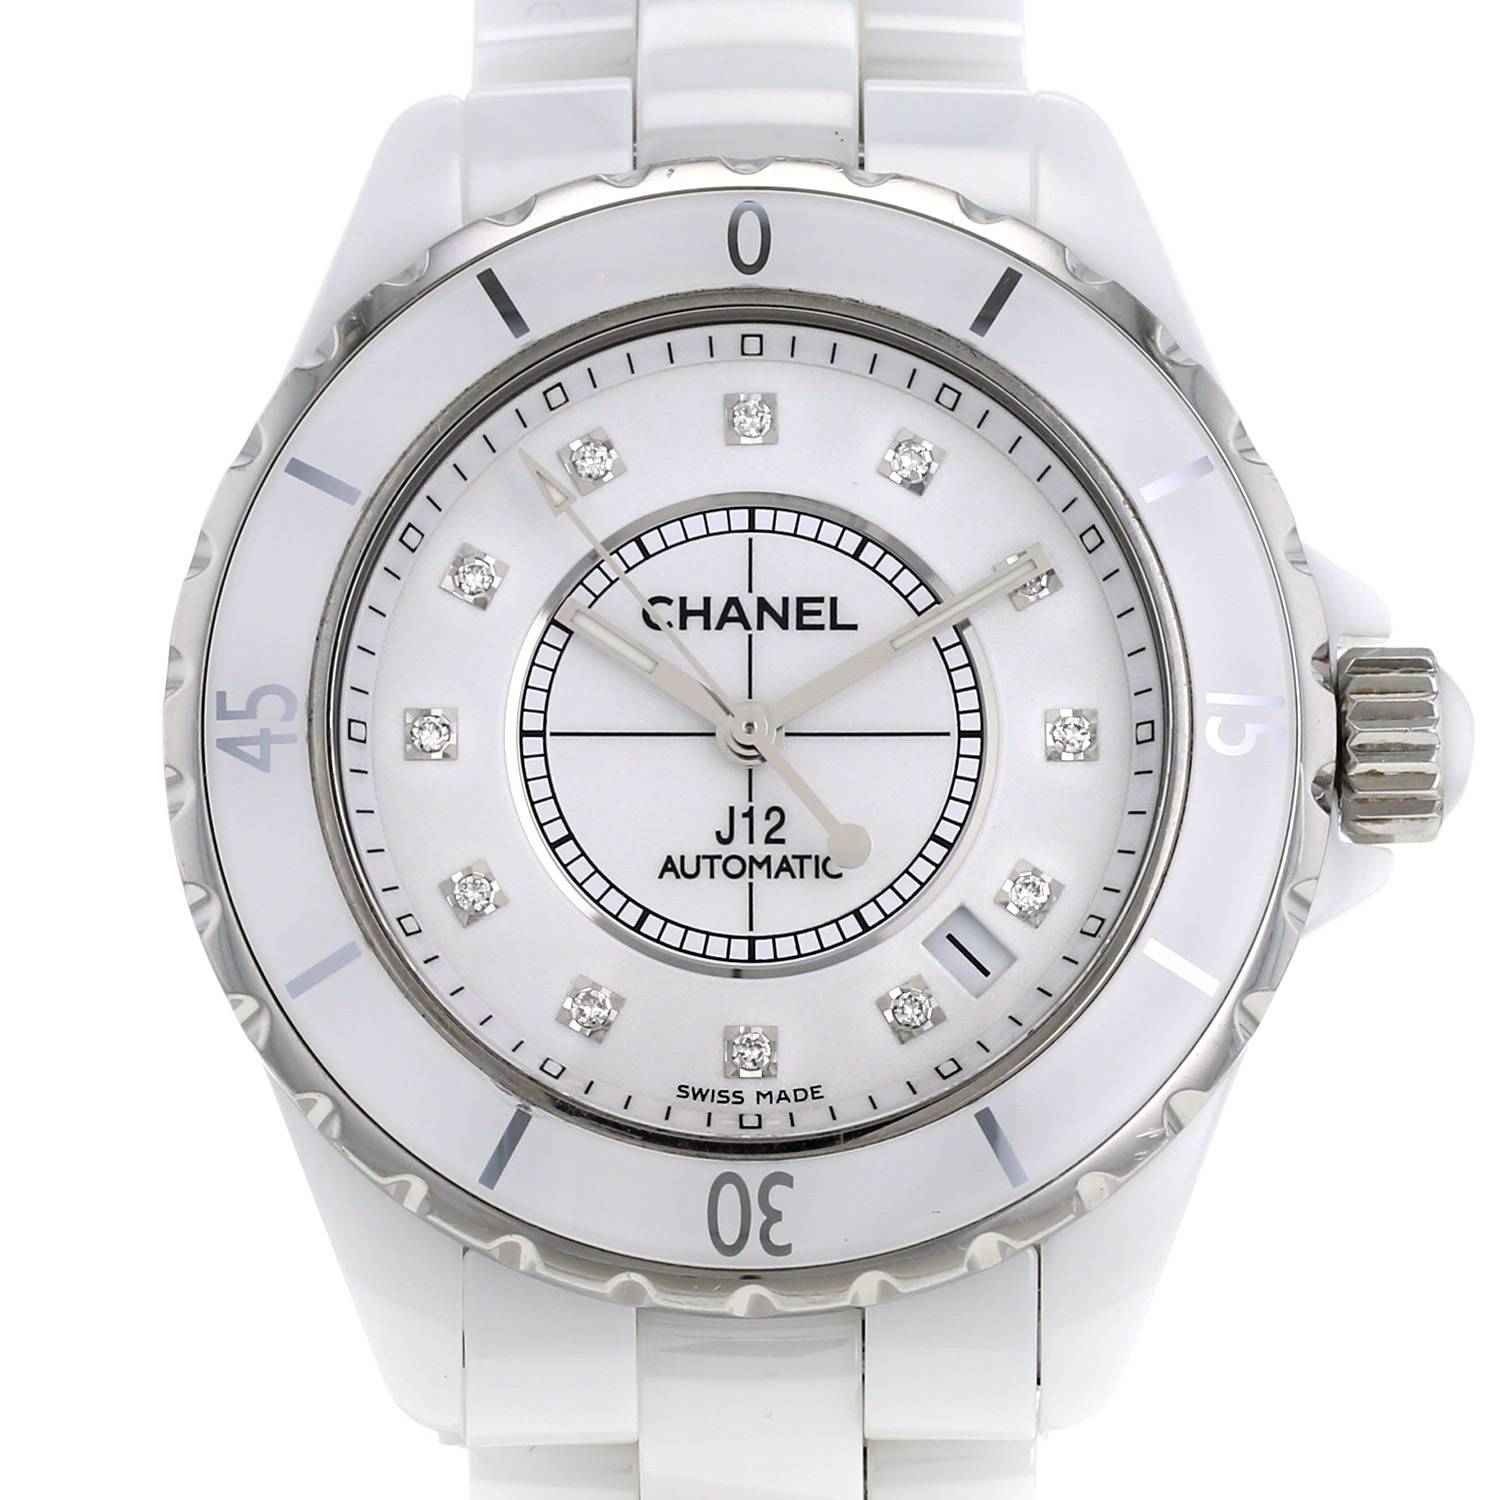 FonjepShops | Chanel J12 Jewel Watch 403996 | drake chanel bag 